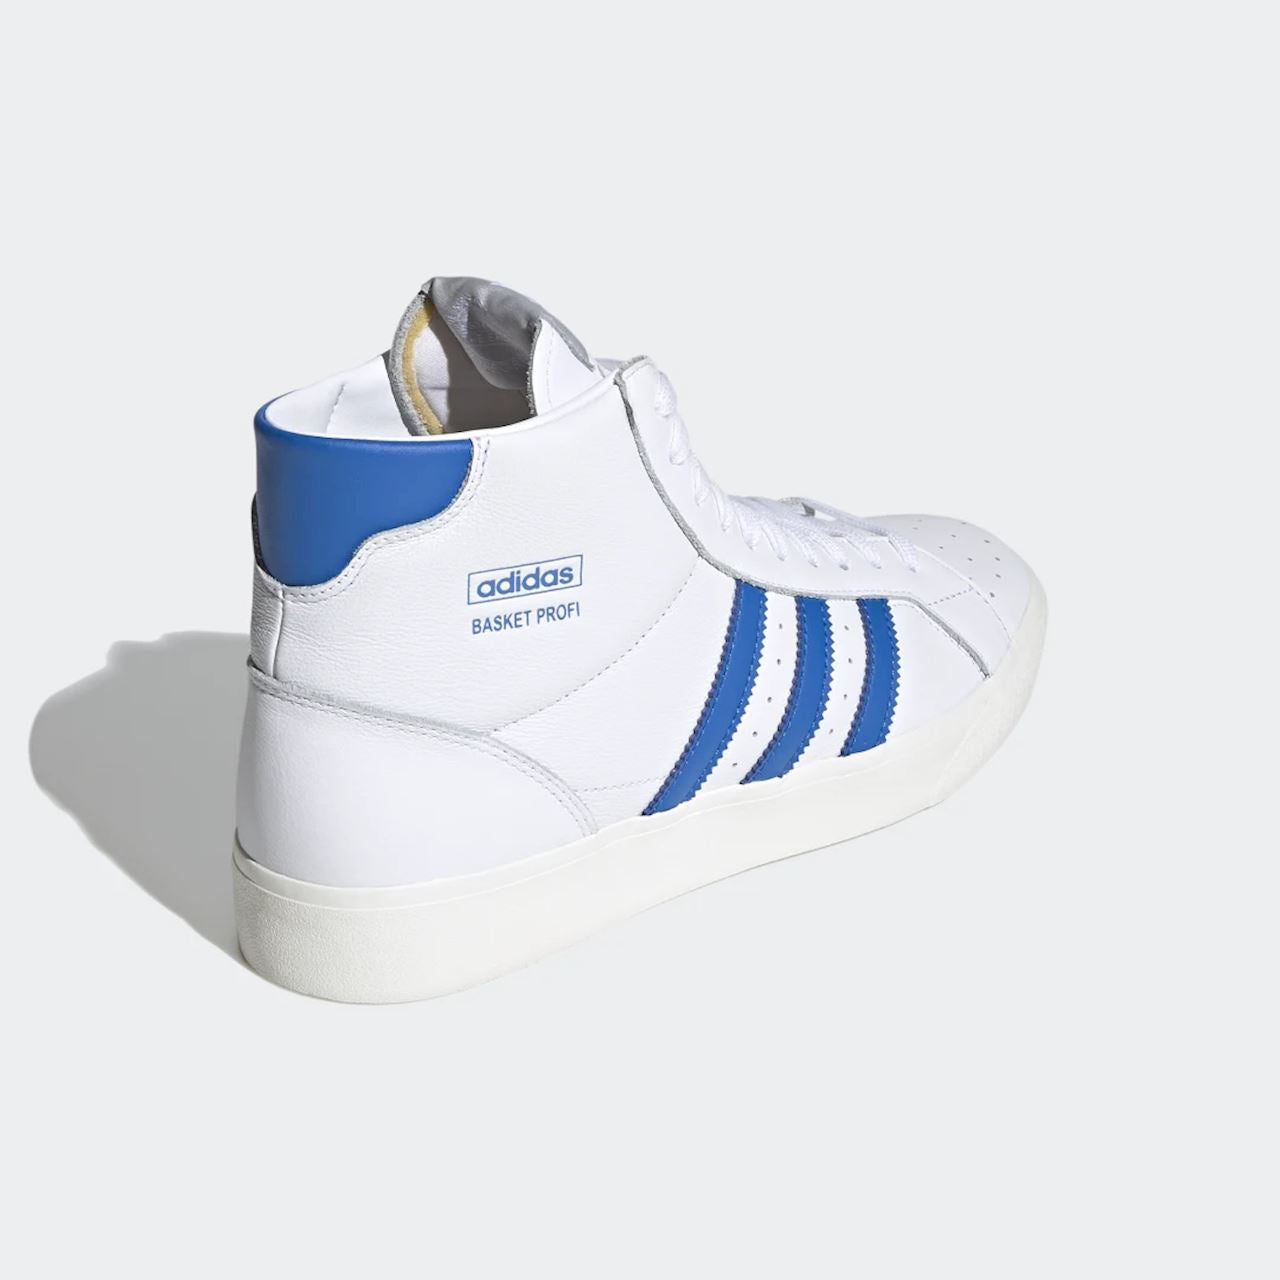 Adidas Originals Men's Basket Profi Mid Shoes - White UK - Trade